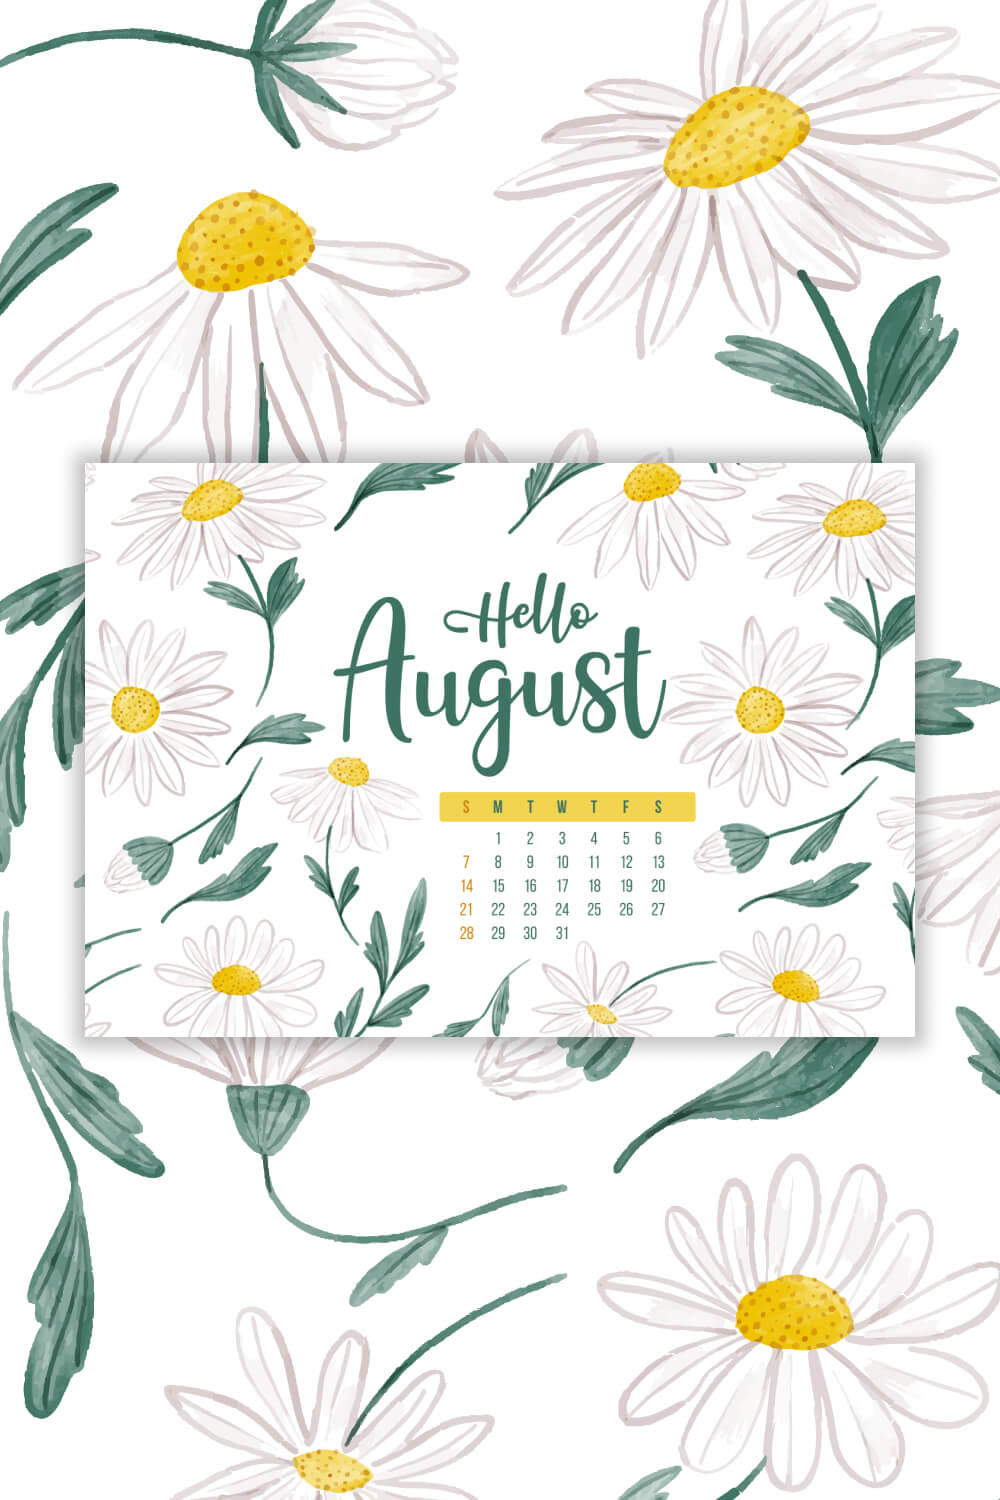 Free Editable August Calendar Pinterest Image.